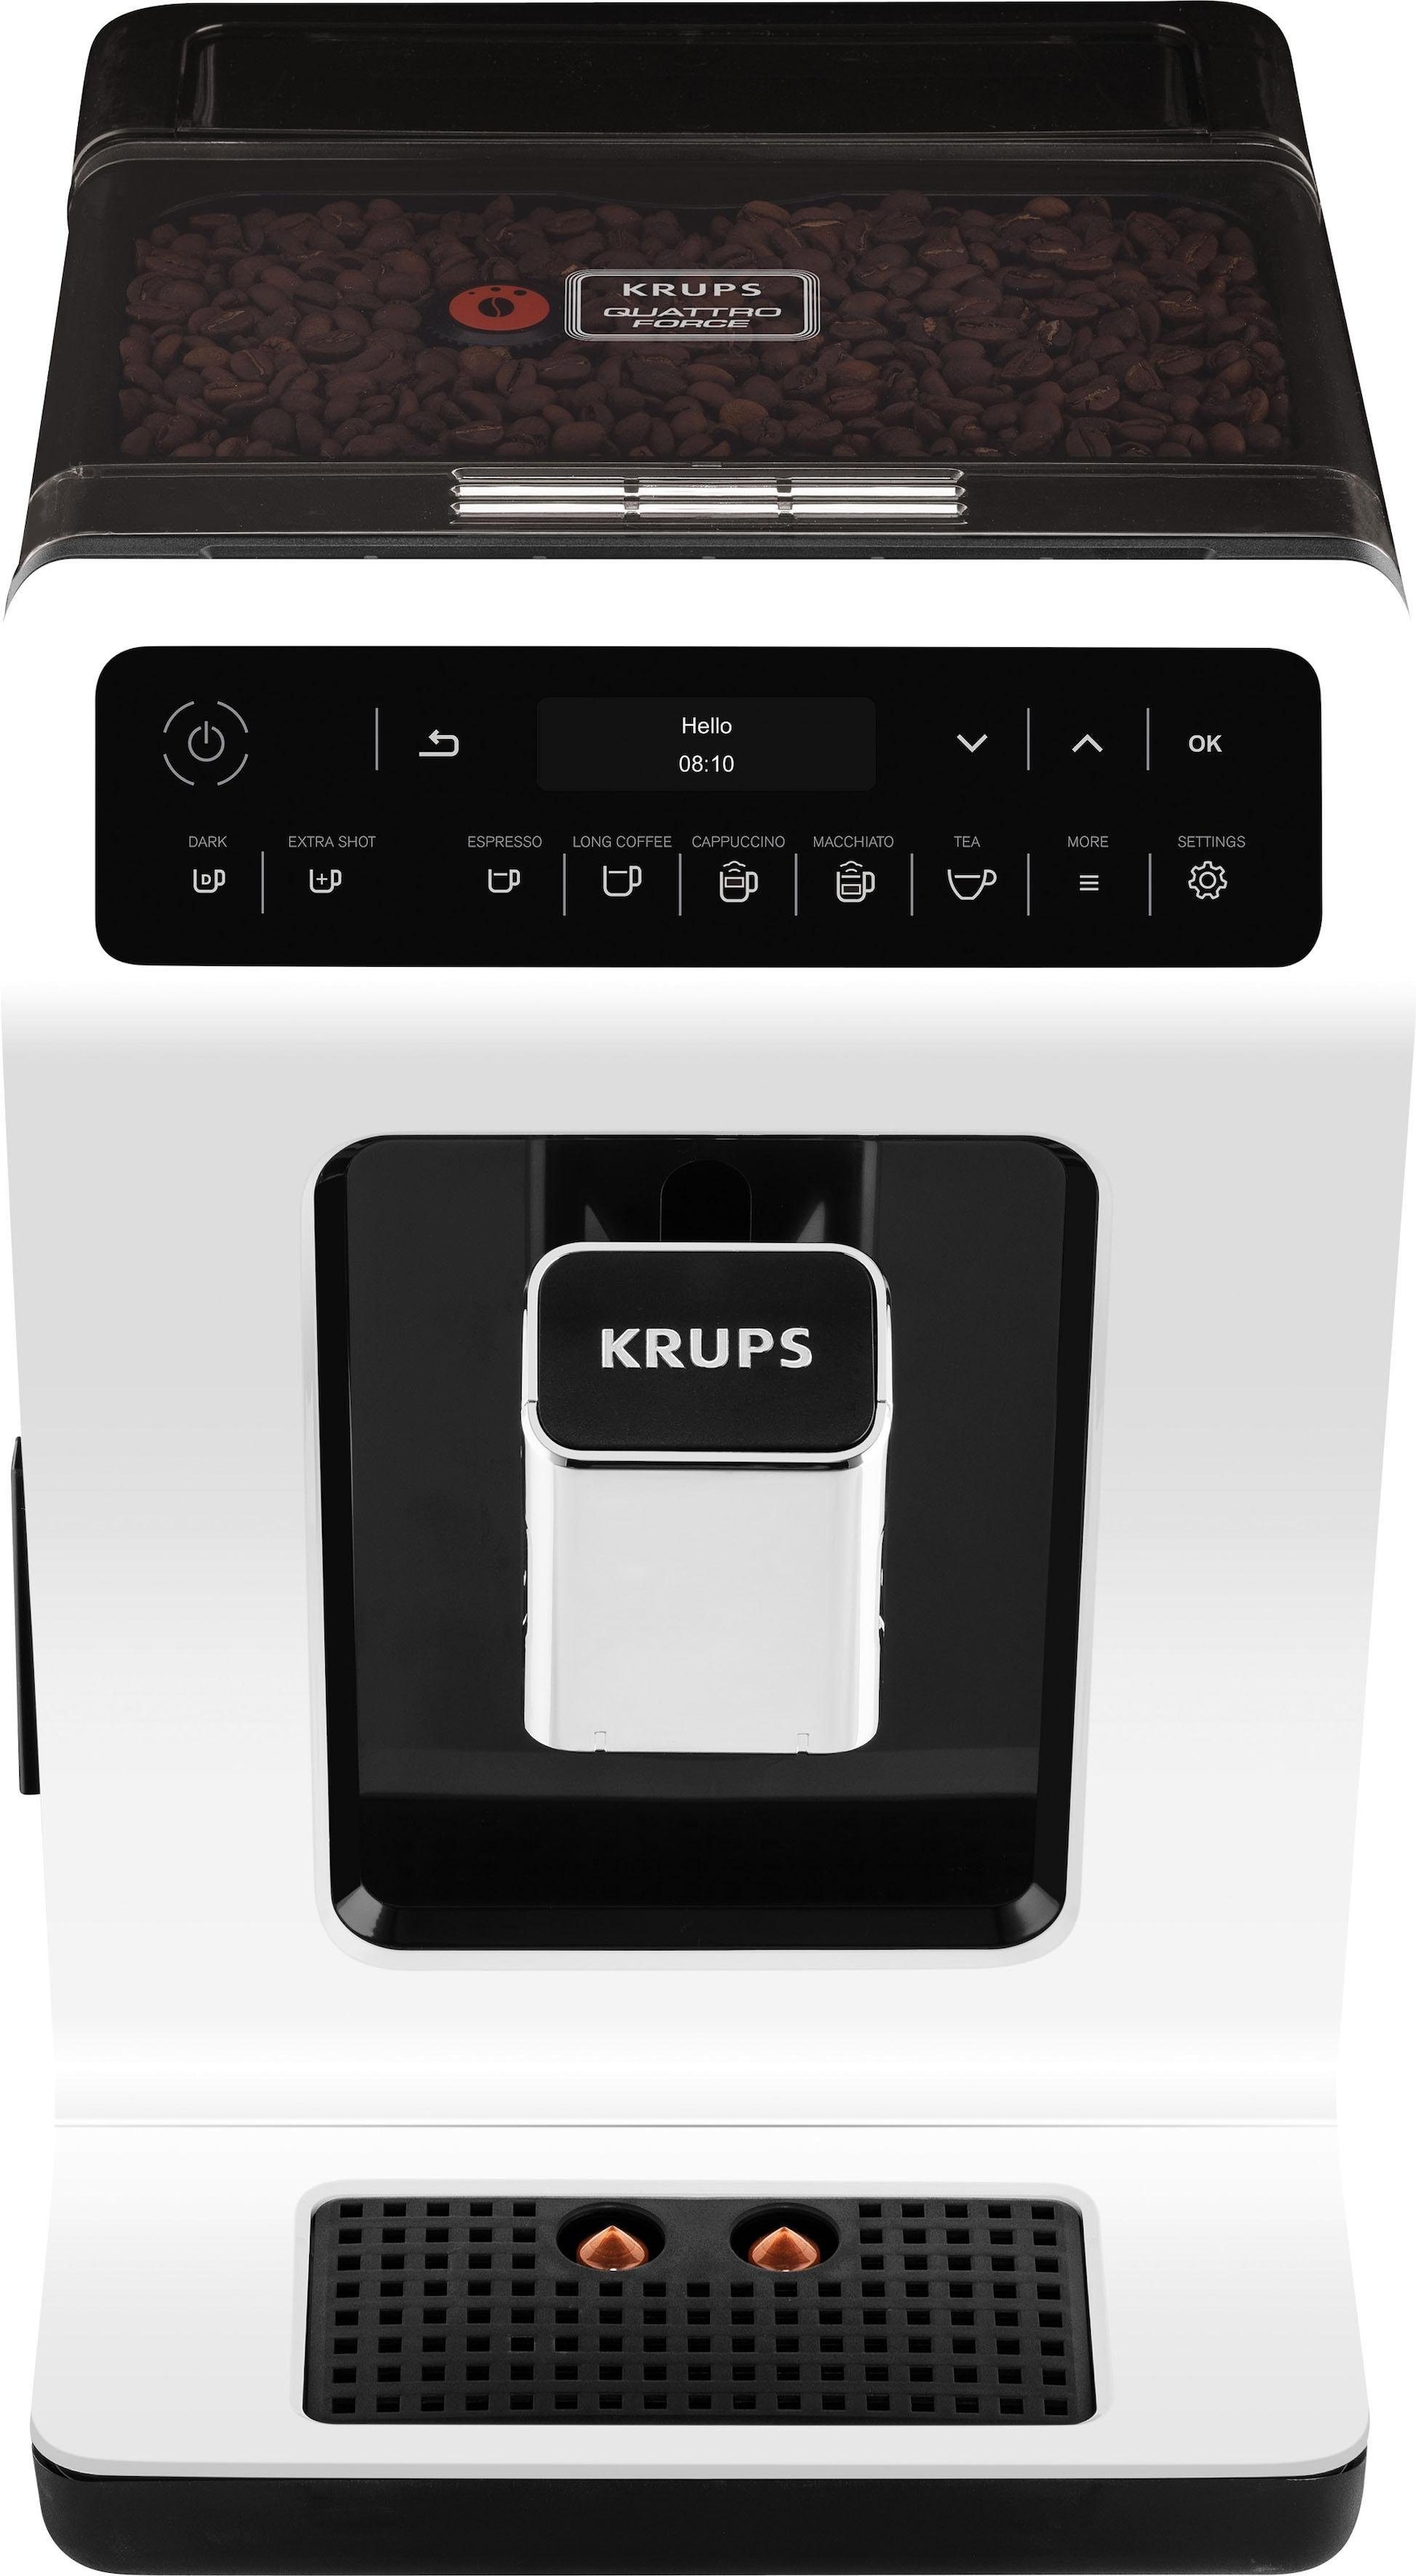 Krups Kaffeevollautomat »EA8911 Evidence«, inkl. Milchbehälter, intuitiver OLED-Display, extra-großer Wassertank